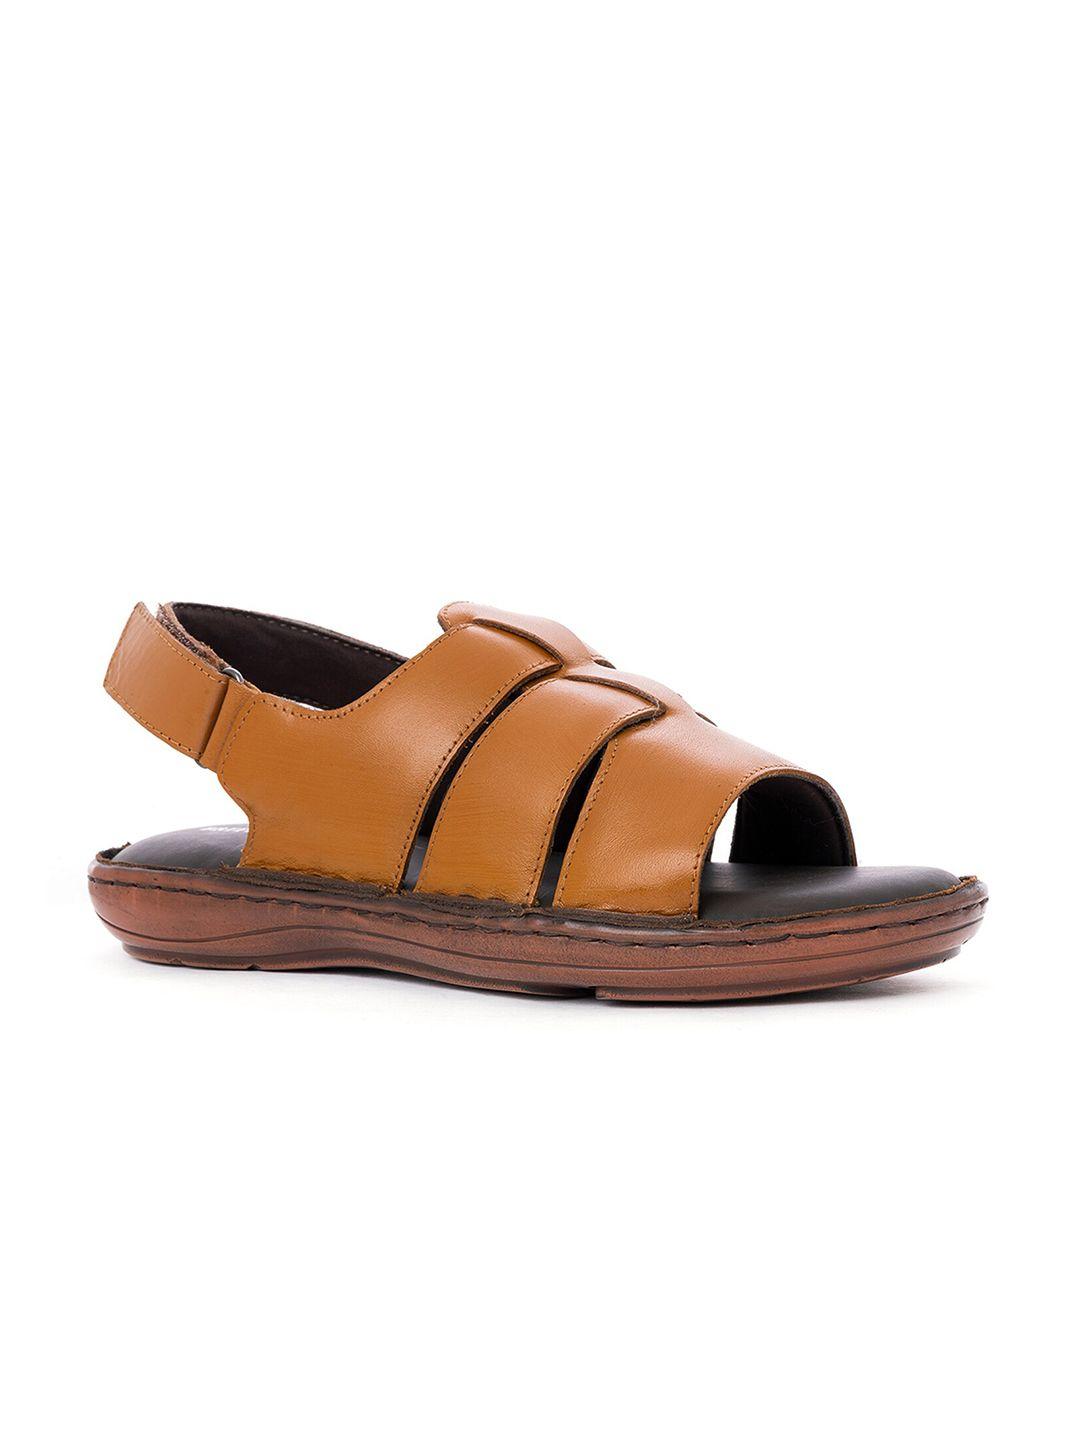 khadims-men-tan-&-black-leather-comfort-sandals